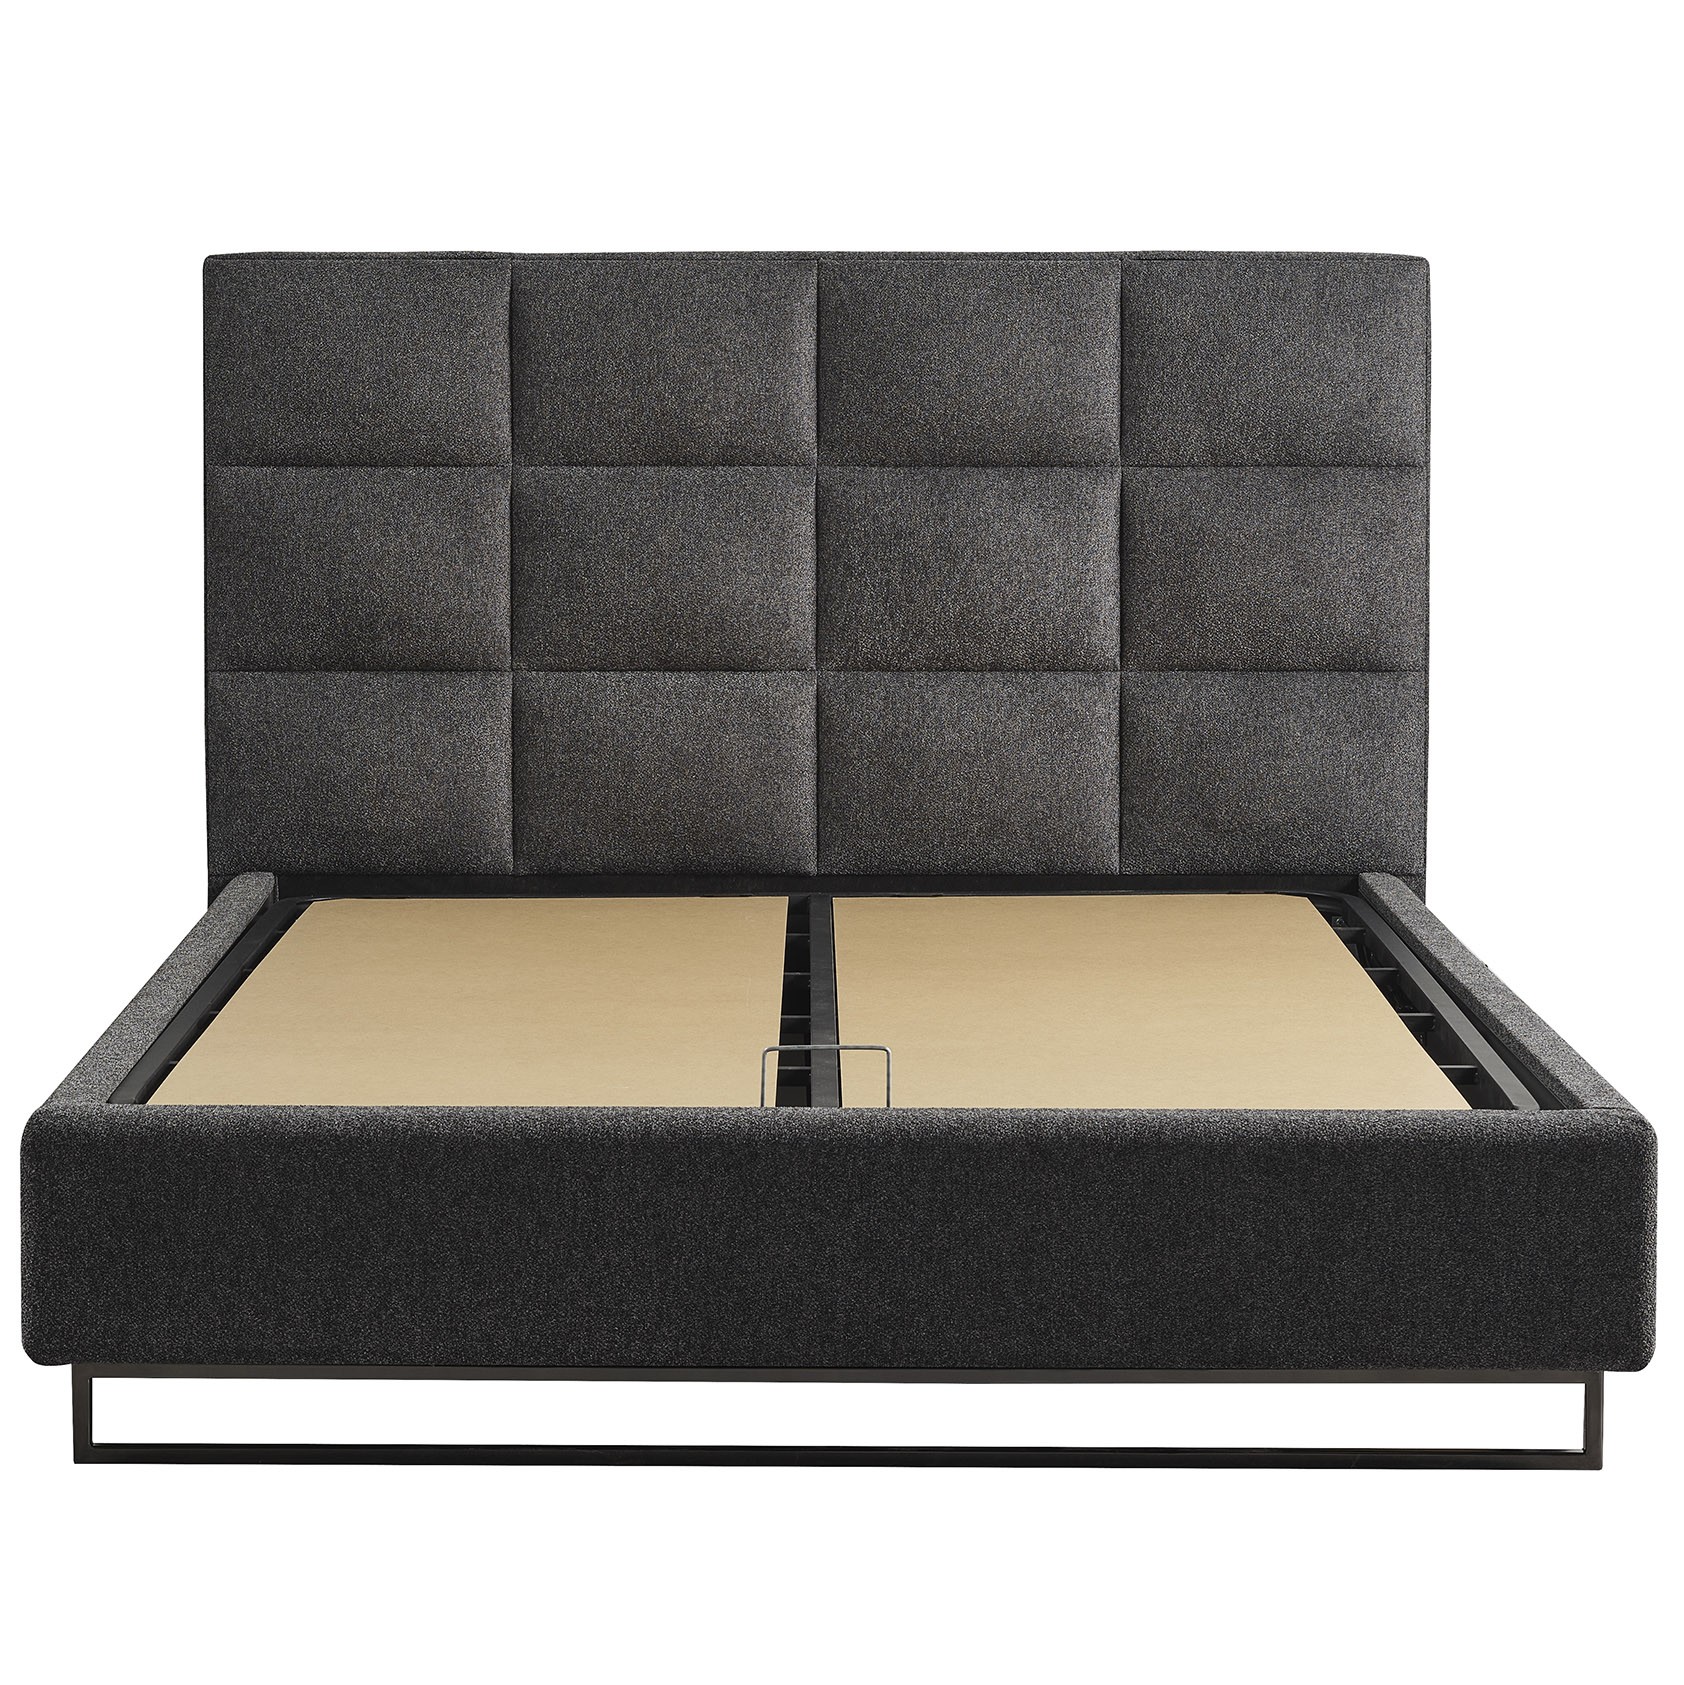 Soft Bed With Storage 160x200 cm